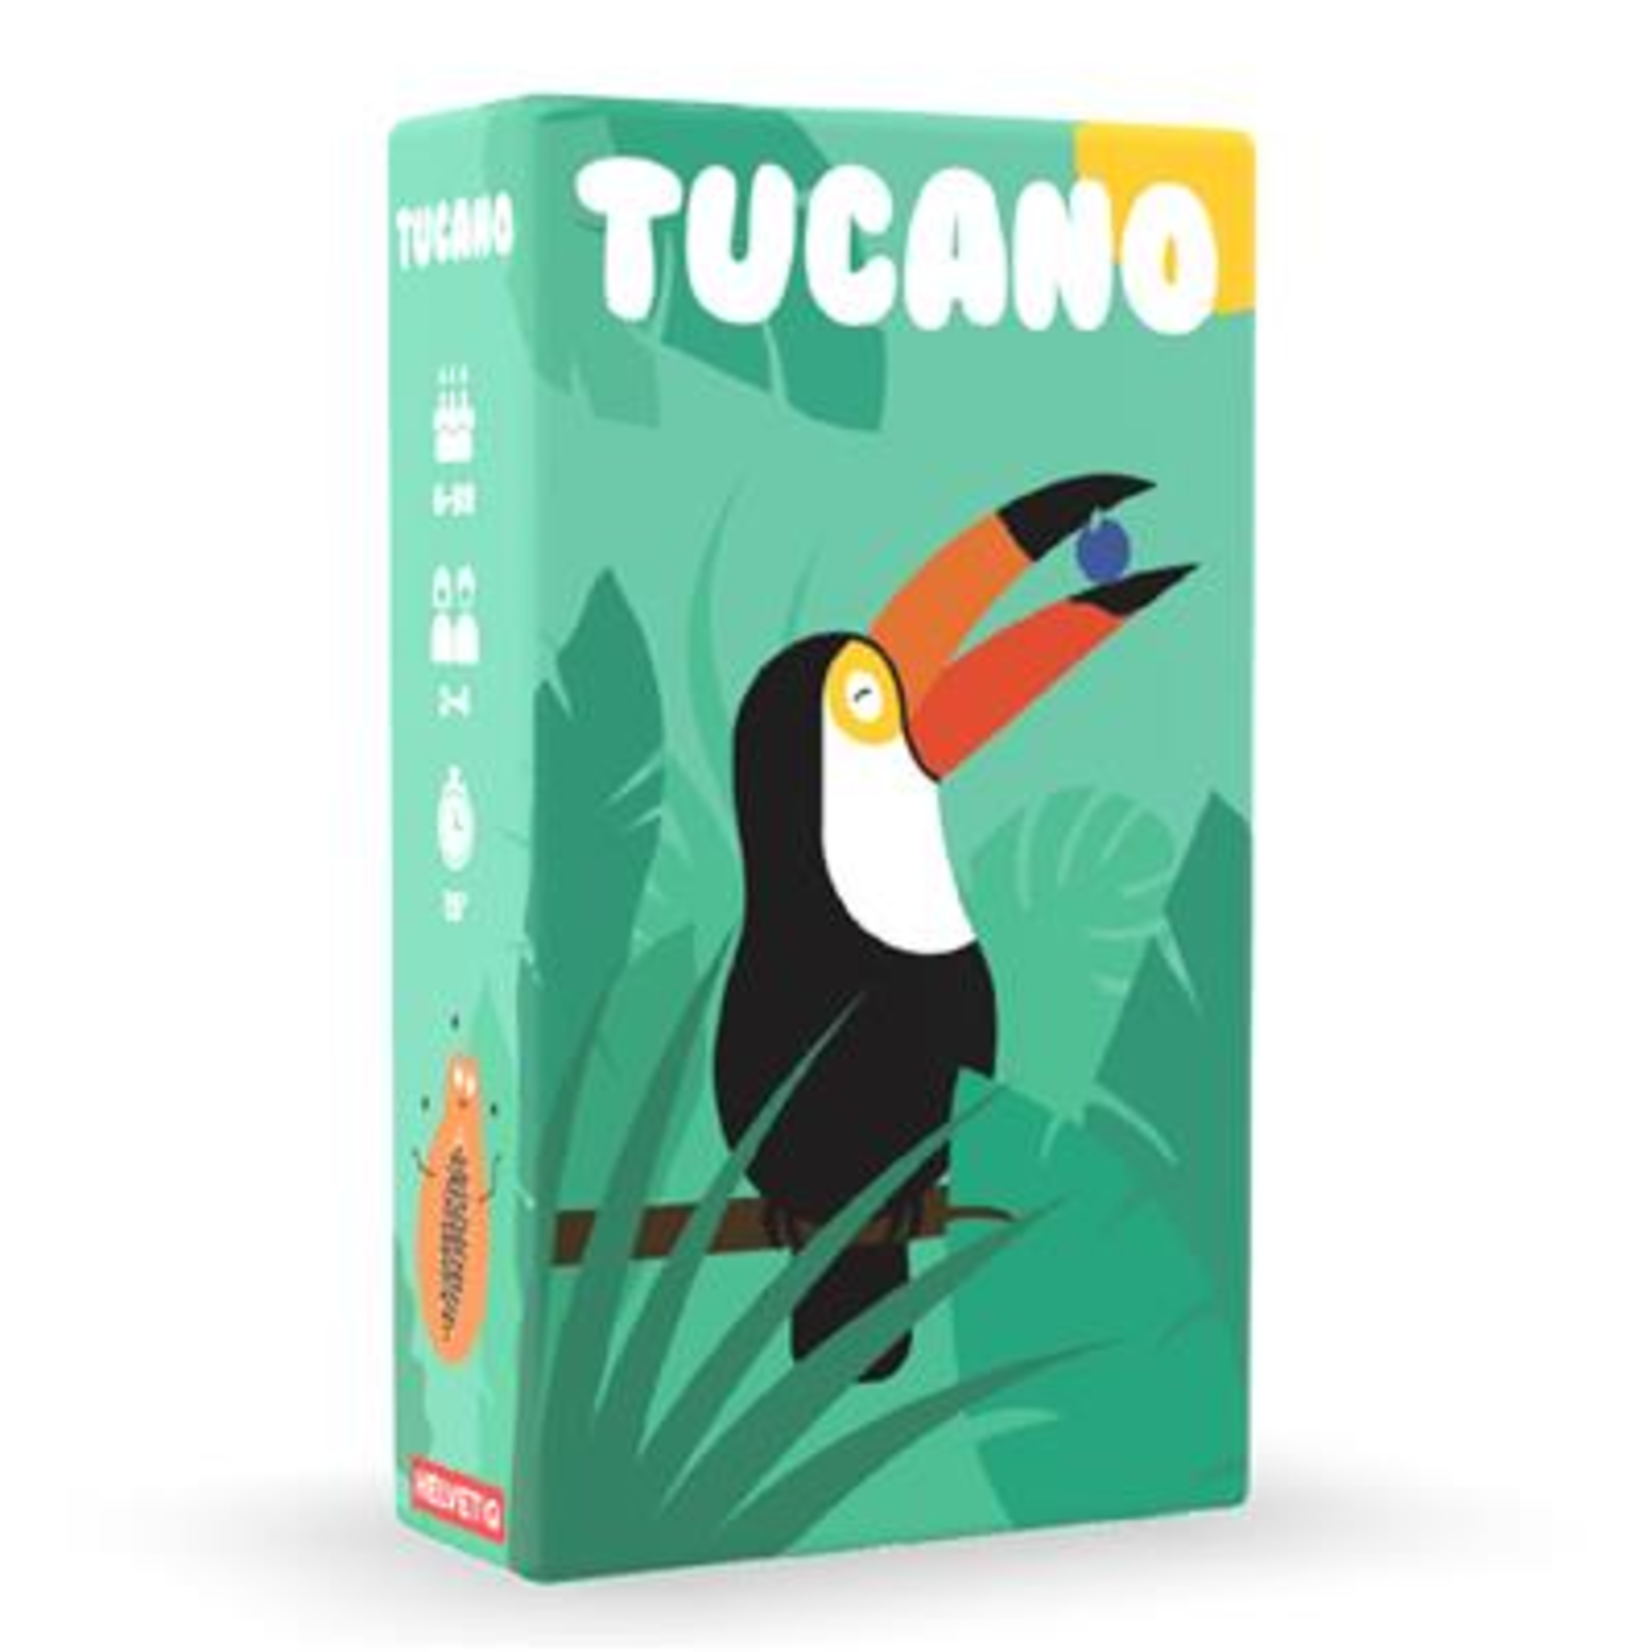 Helvetiq Tucano